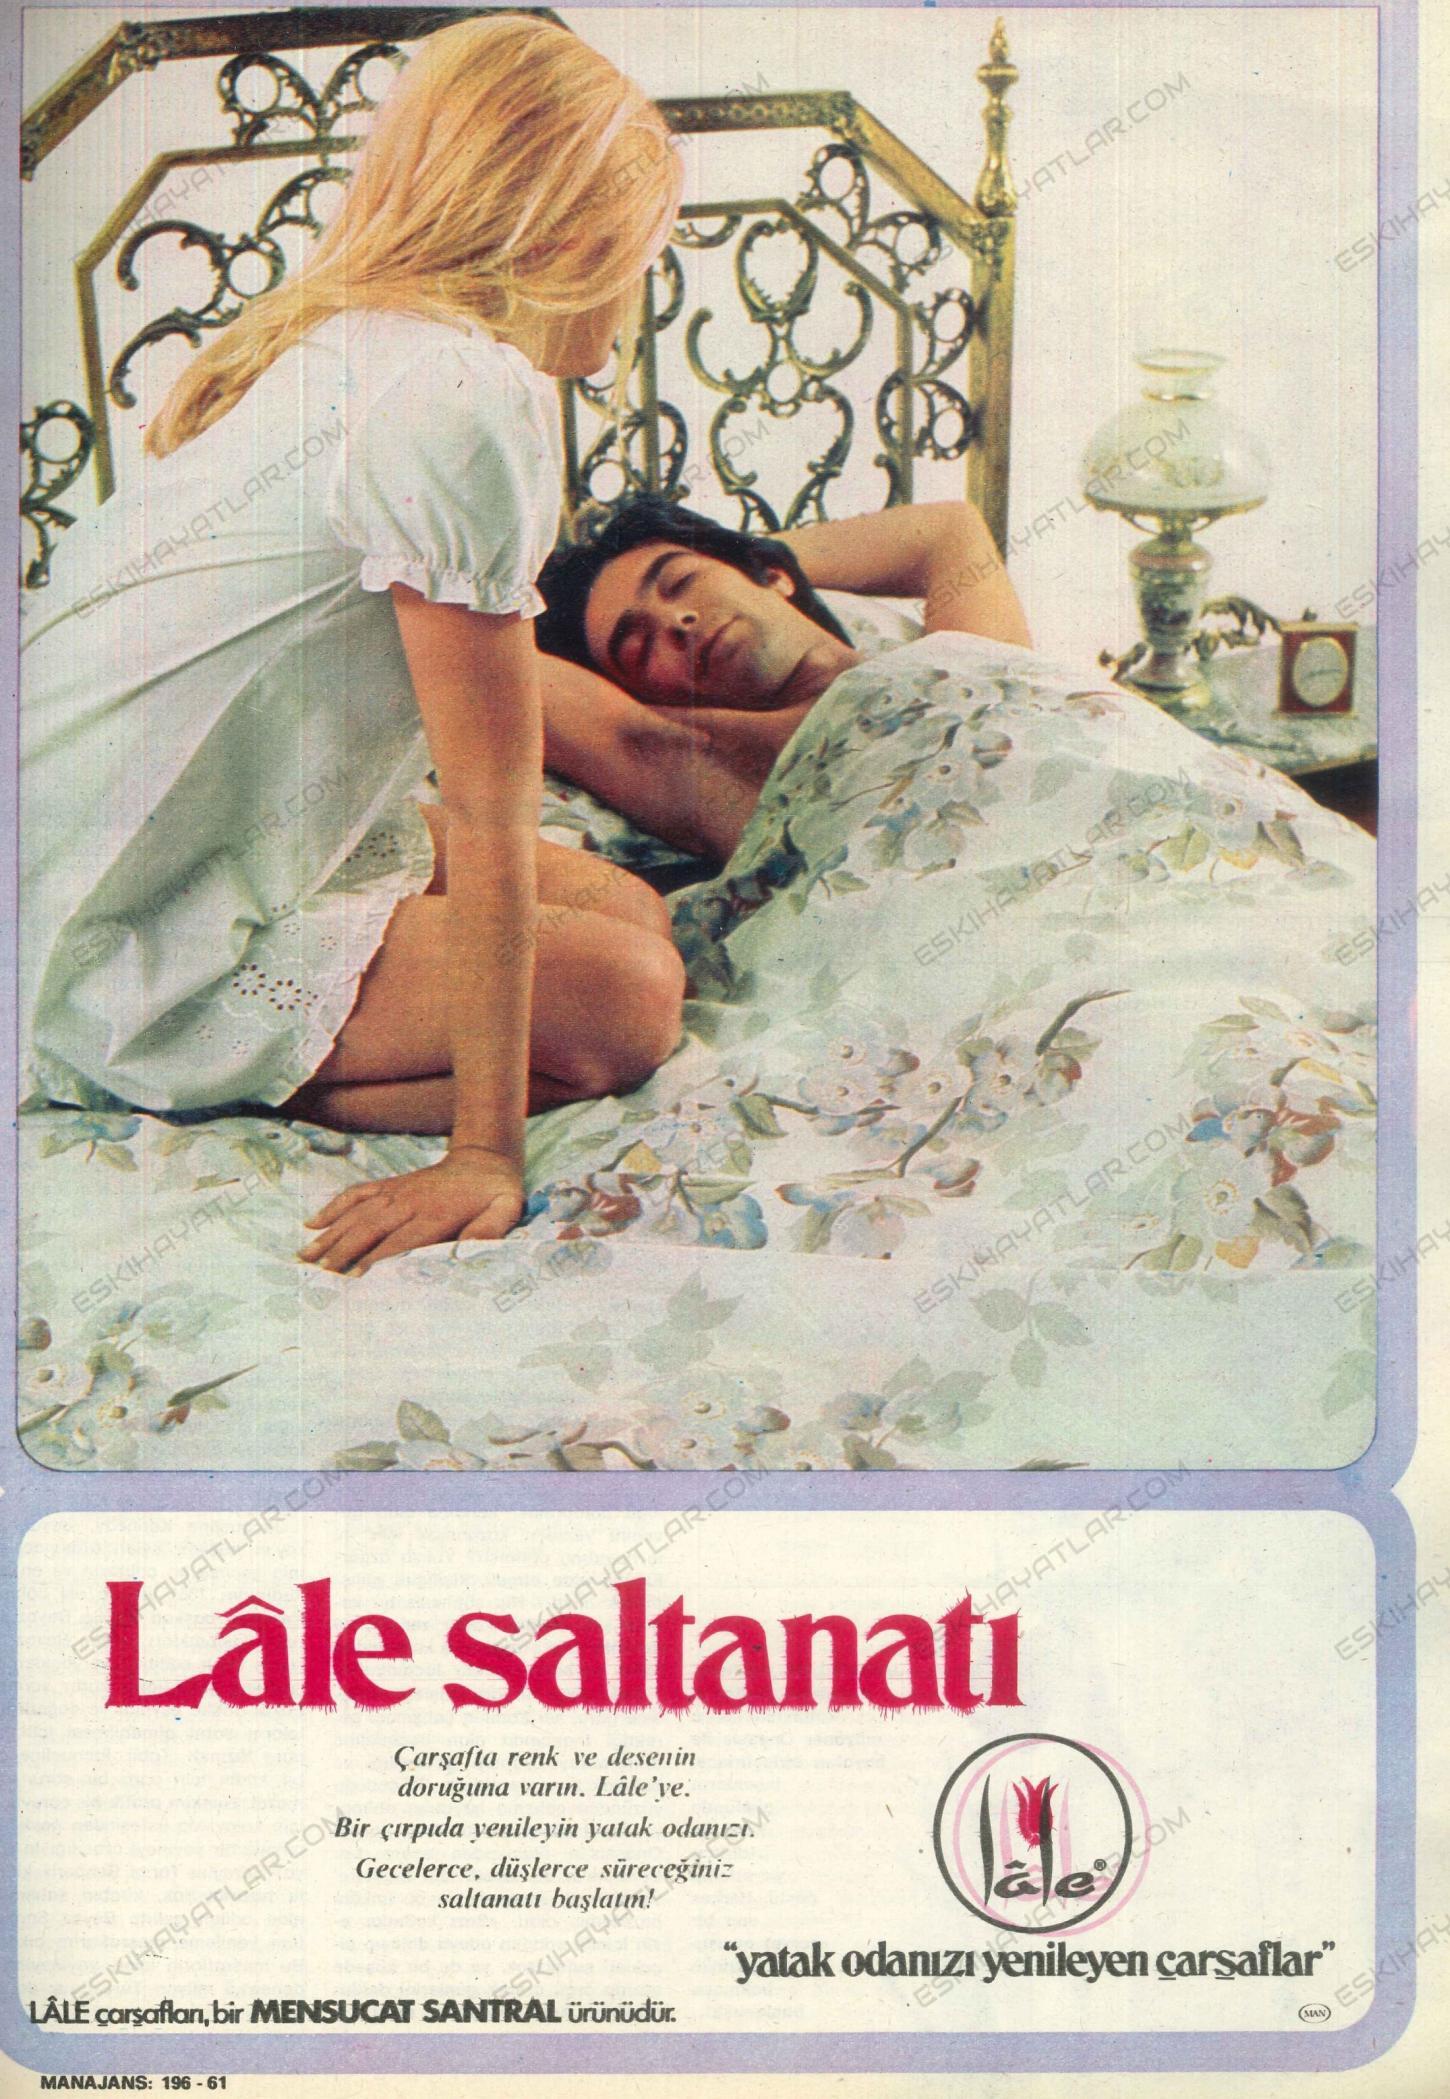 0349-lale-carsaf-reklami-1976-mensucat-santral-sanayi-reklamlari-lale-saltanati